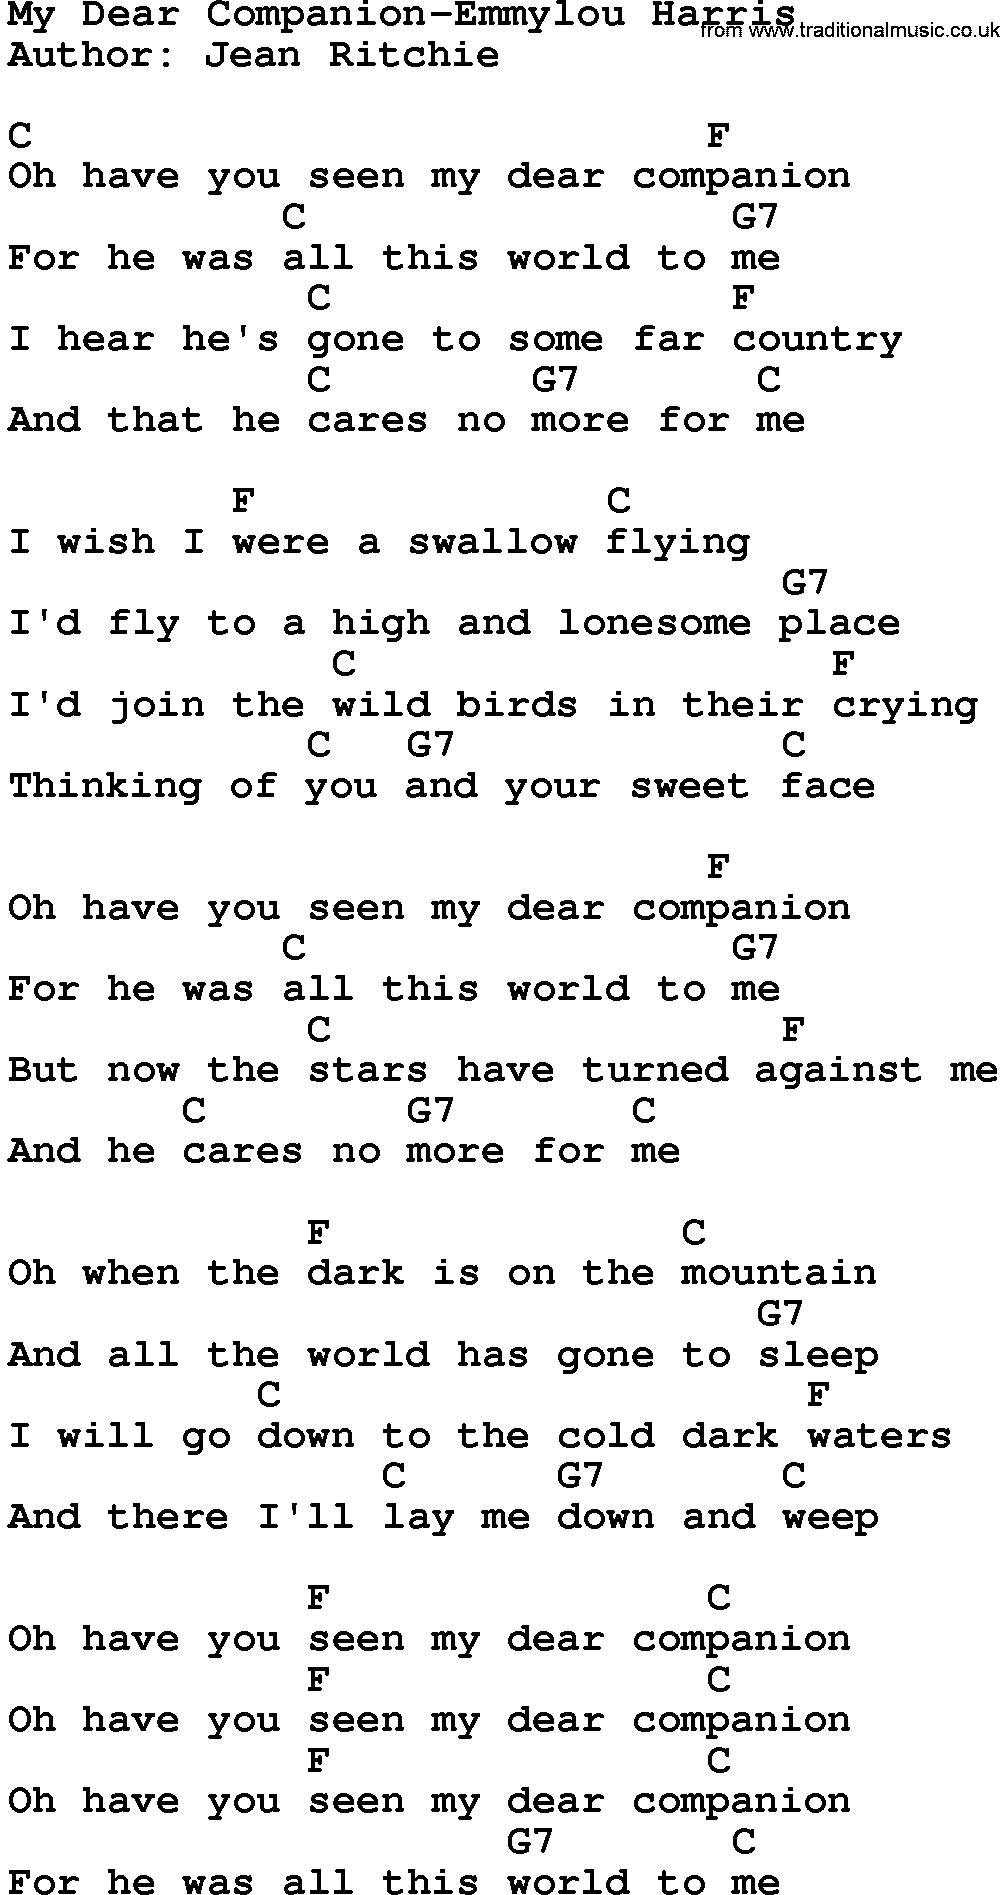 Country music song: My Dear Companion-Emmylou Harris lyrics and chords